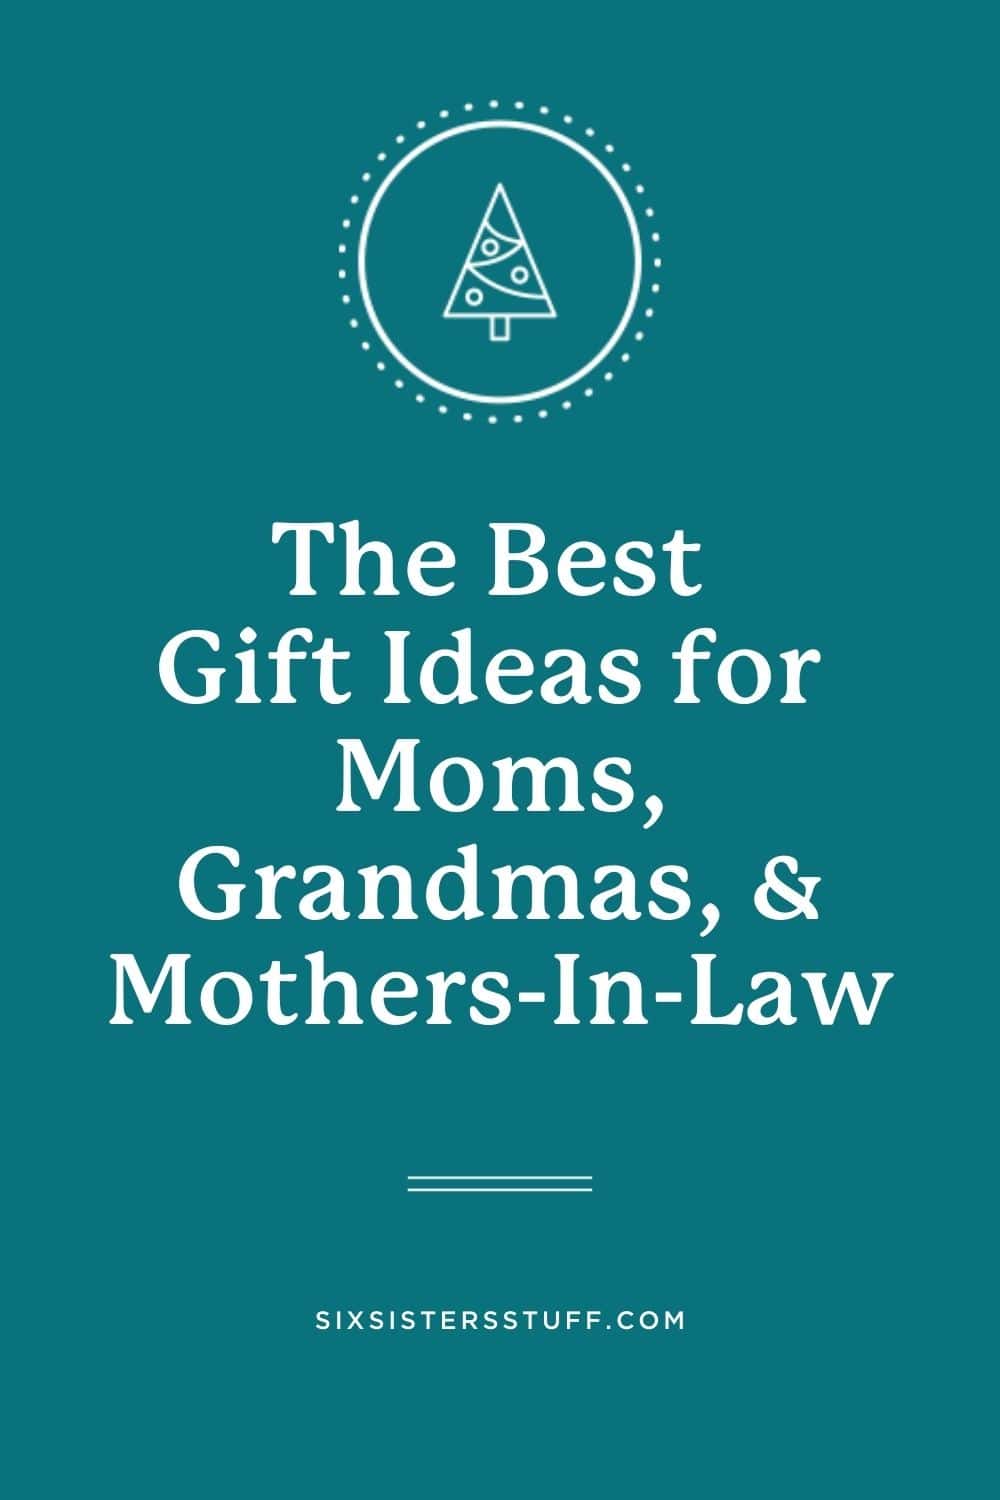 https://www.sixsistersstuff.com/wp-content/uploads/2020/12/Best-Gift-Ideas-for-Moms.jpg